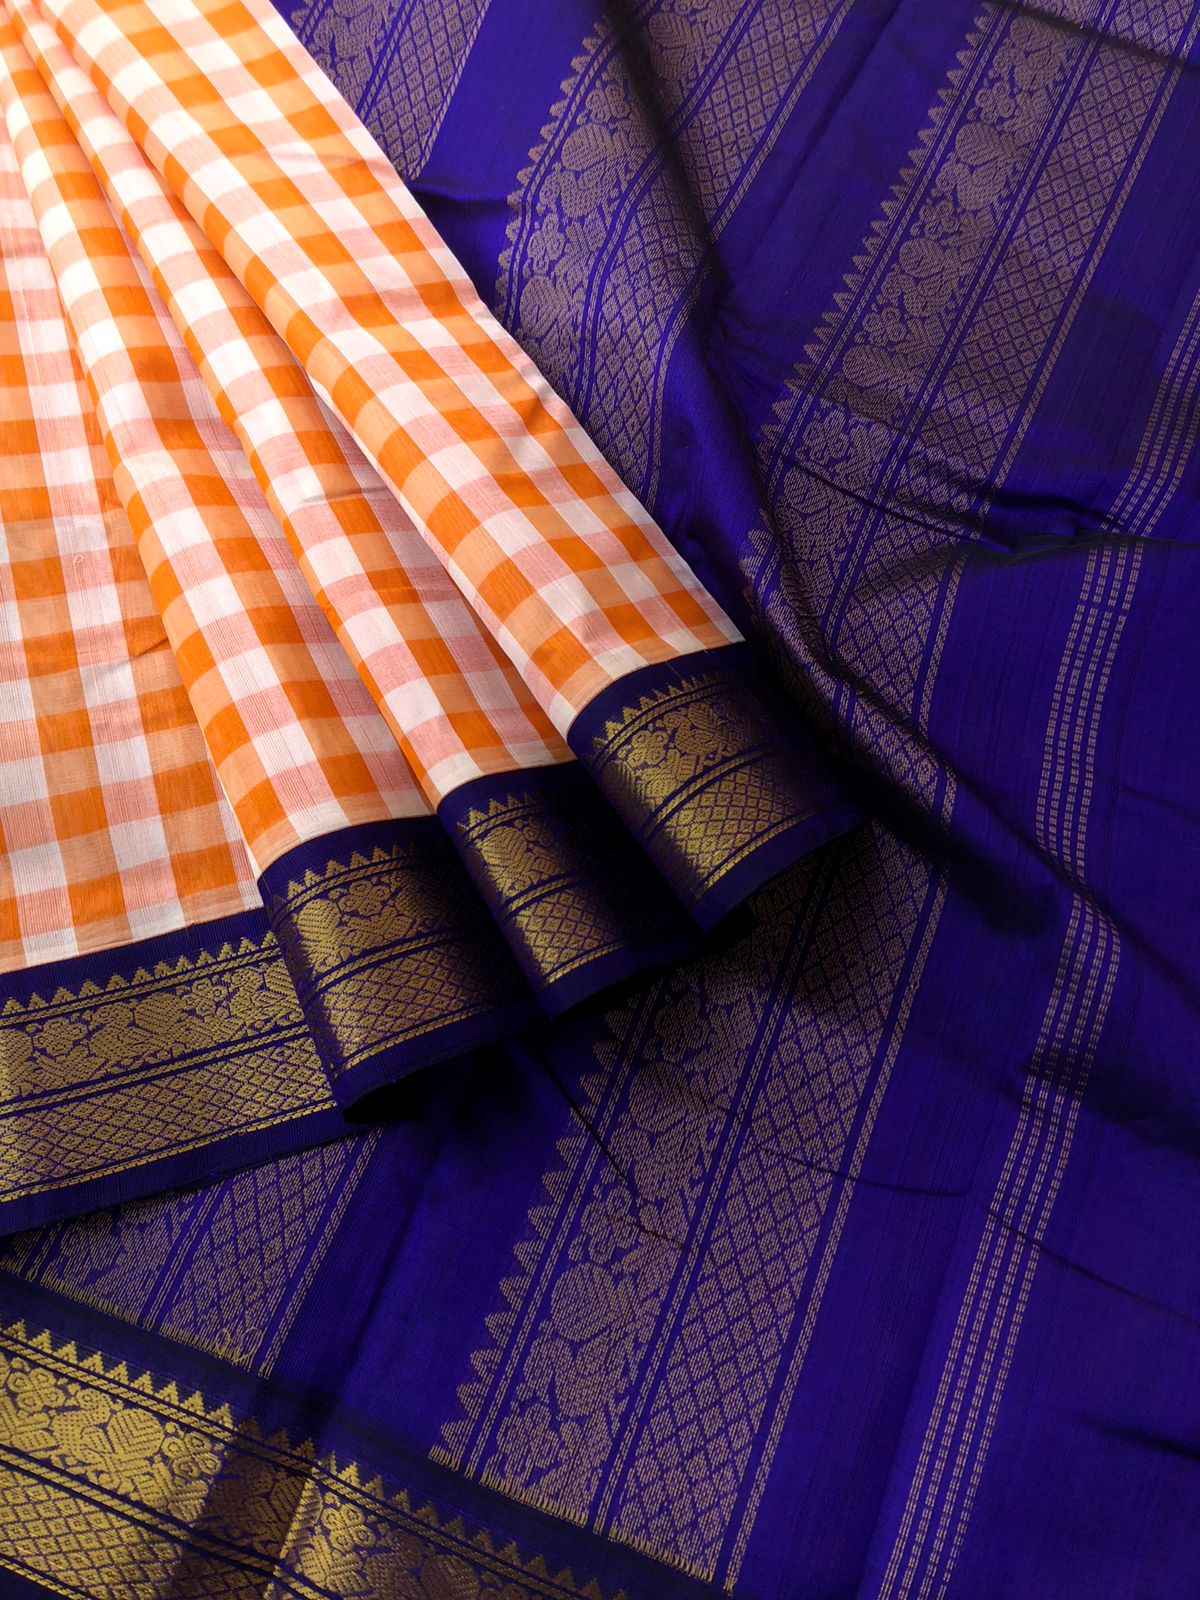 Paalum palamum kattam on Korvai Silk Cotton - off white and orange chex with ink blue borders and pallu